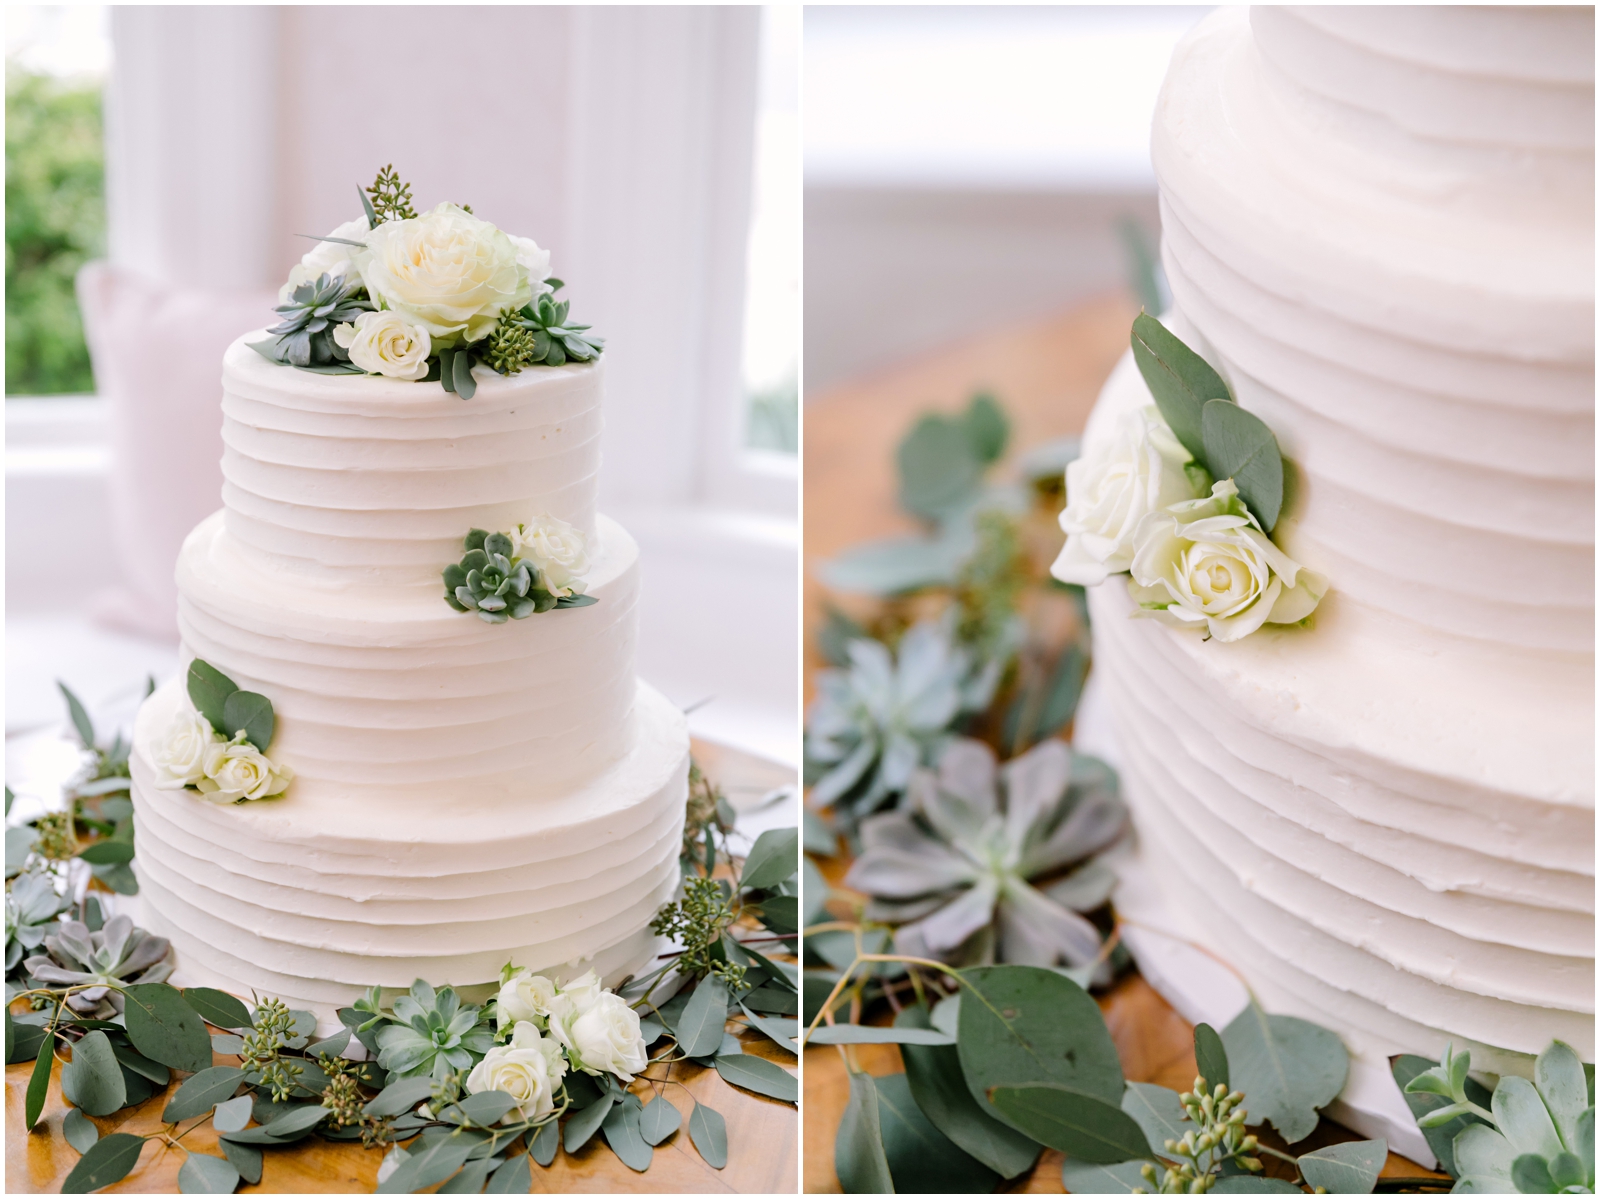  White and greenery wedding cake 